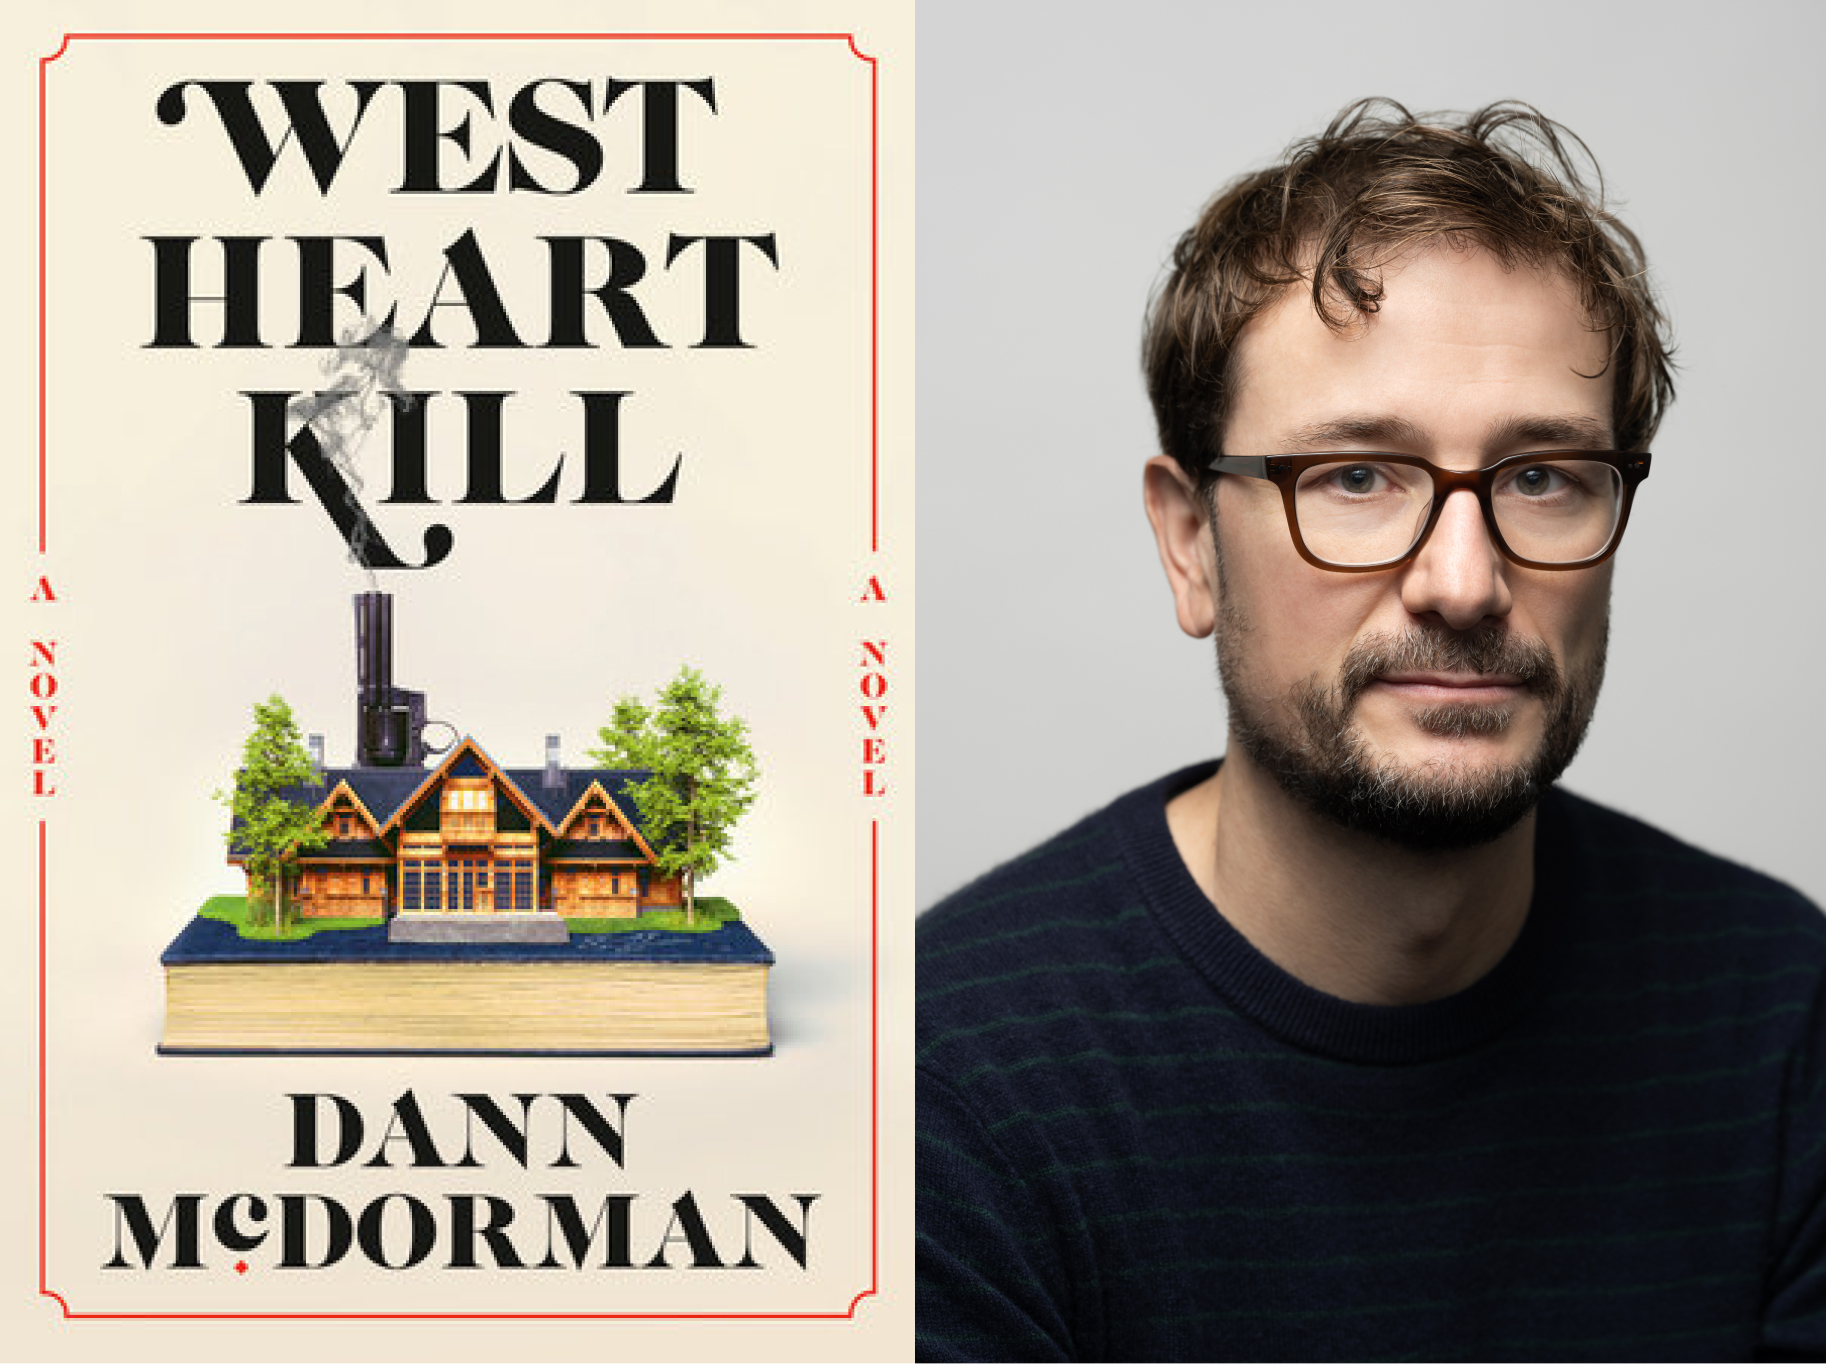 Article image for: 'West Heart Kill,' by Dann McDorman: An Excerpt